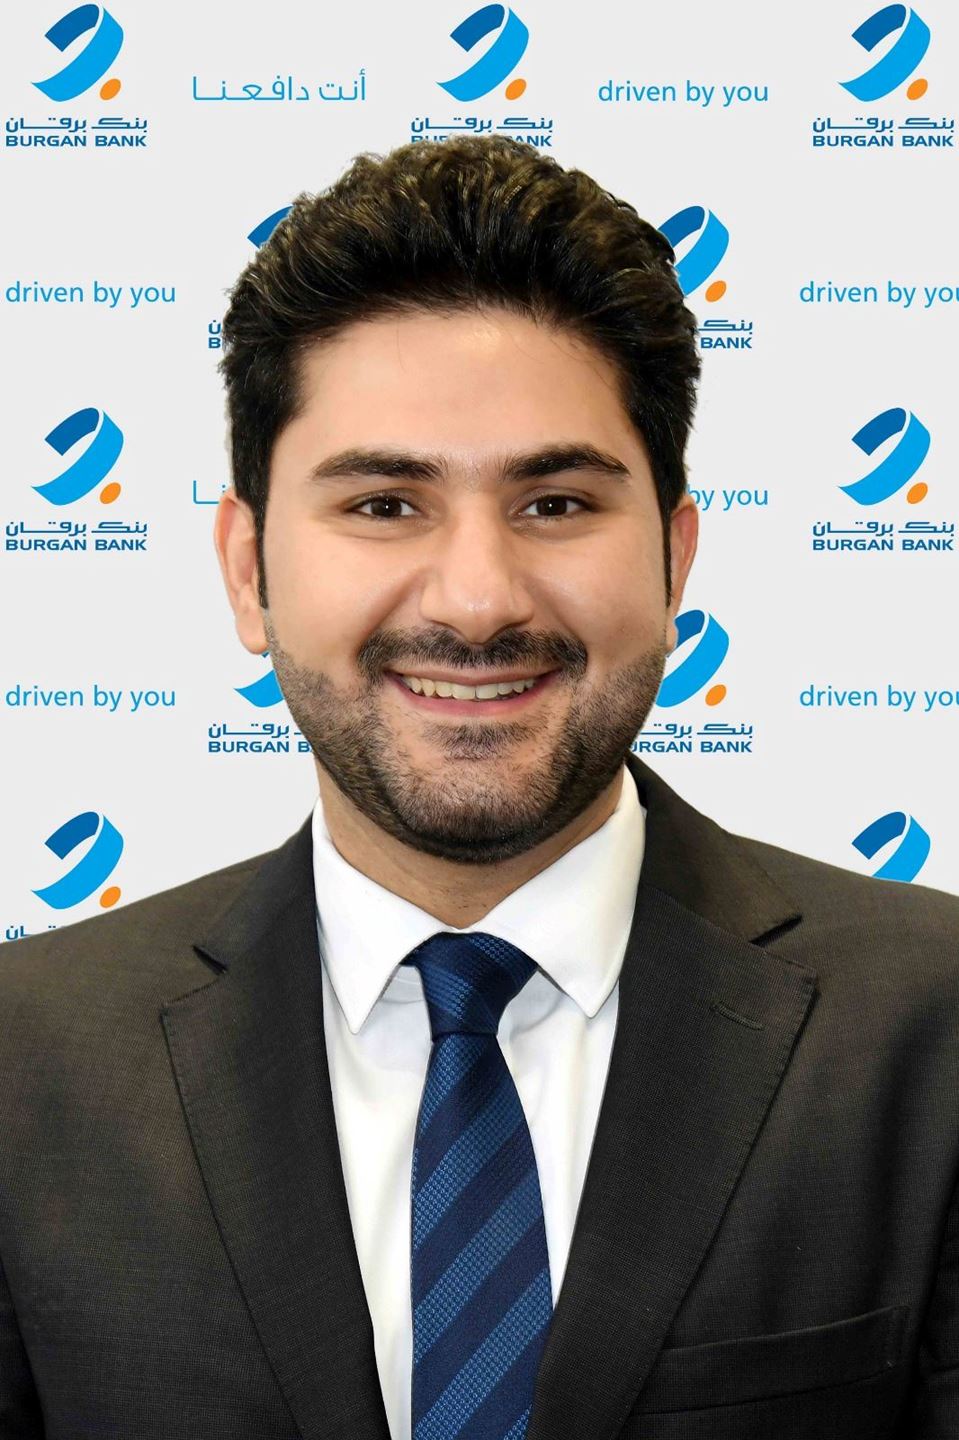 Mr. Bashar Al-Qattan, Manager of Talent Empowerment at Burgan Bank